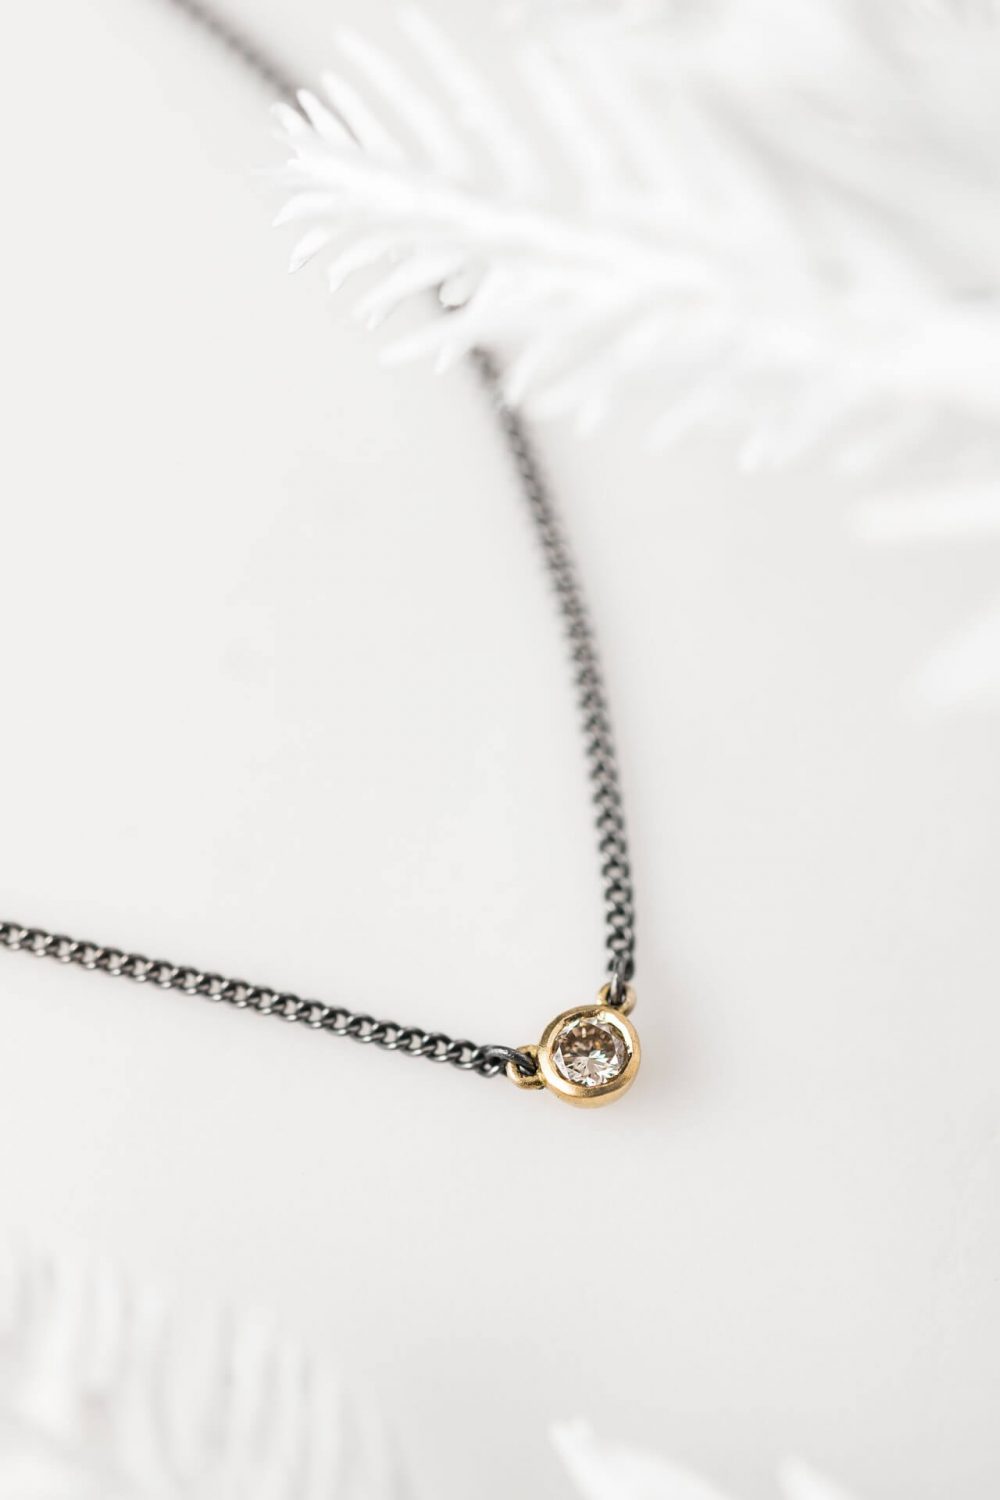 Gold Diamond Pendant Adoré. By British Jewellery Designer Jacks Turner Bristol